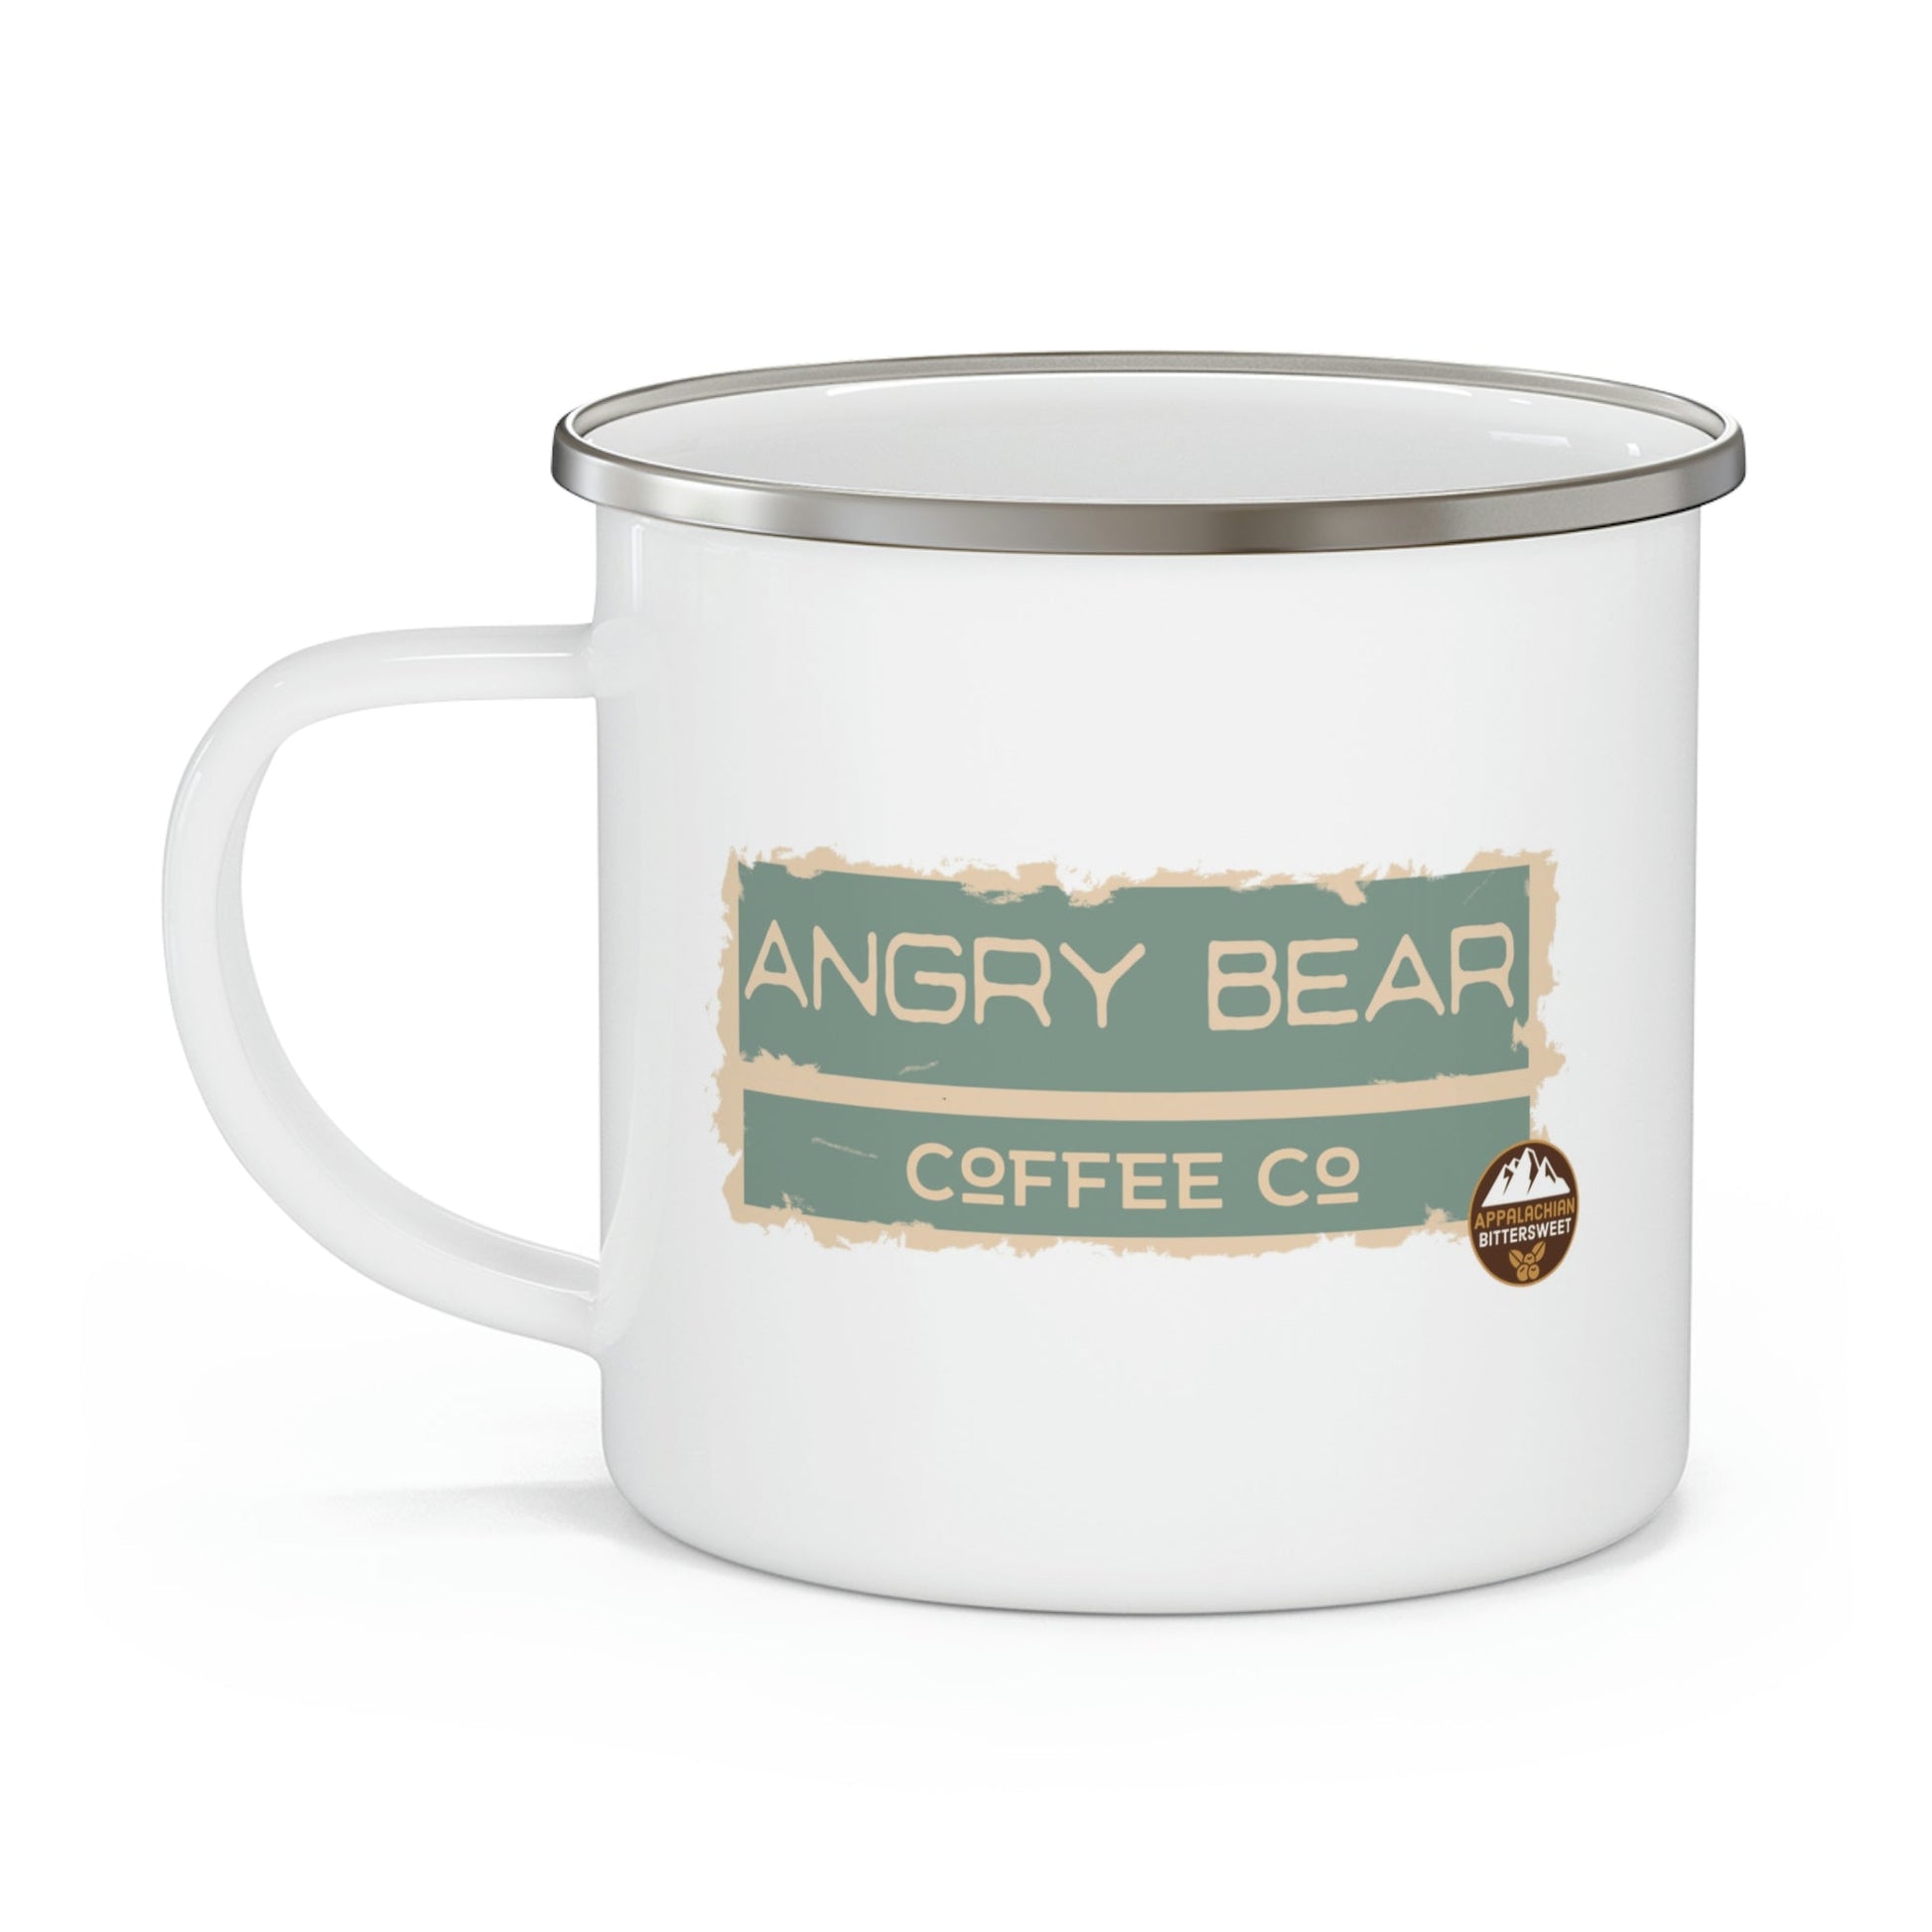 Angry Bear Coffee Co Enamel Camping Mug - Appalachian Bittersweet - Mug